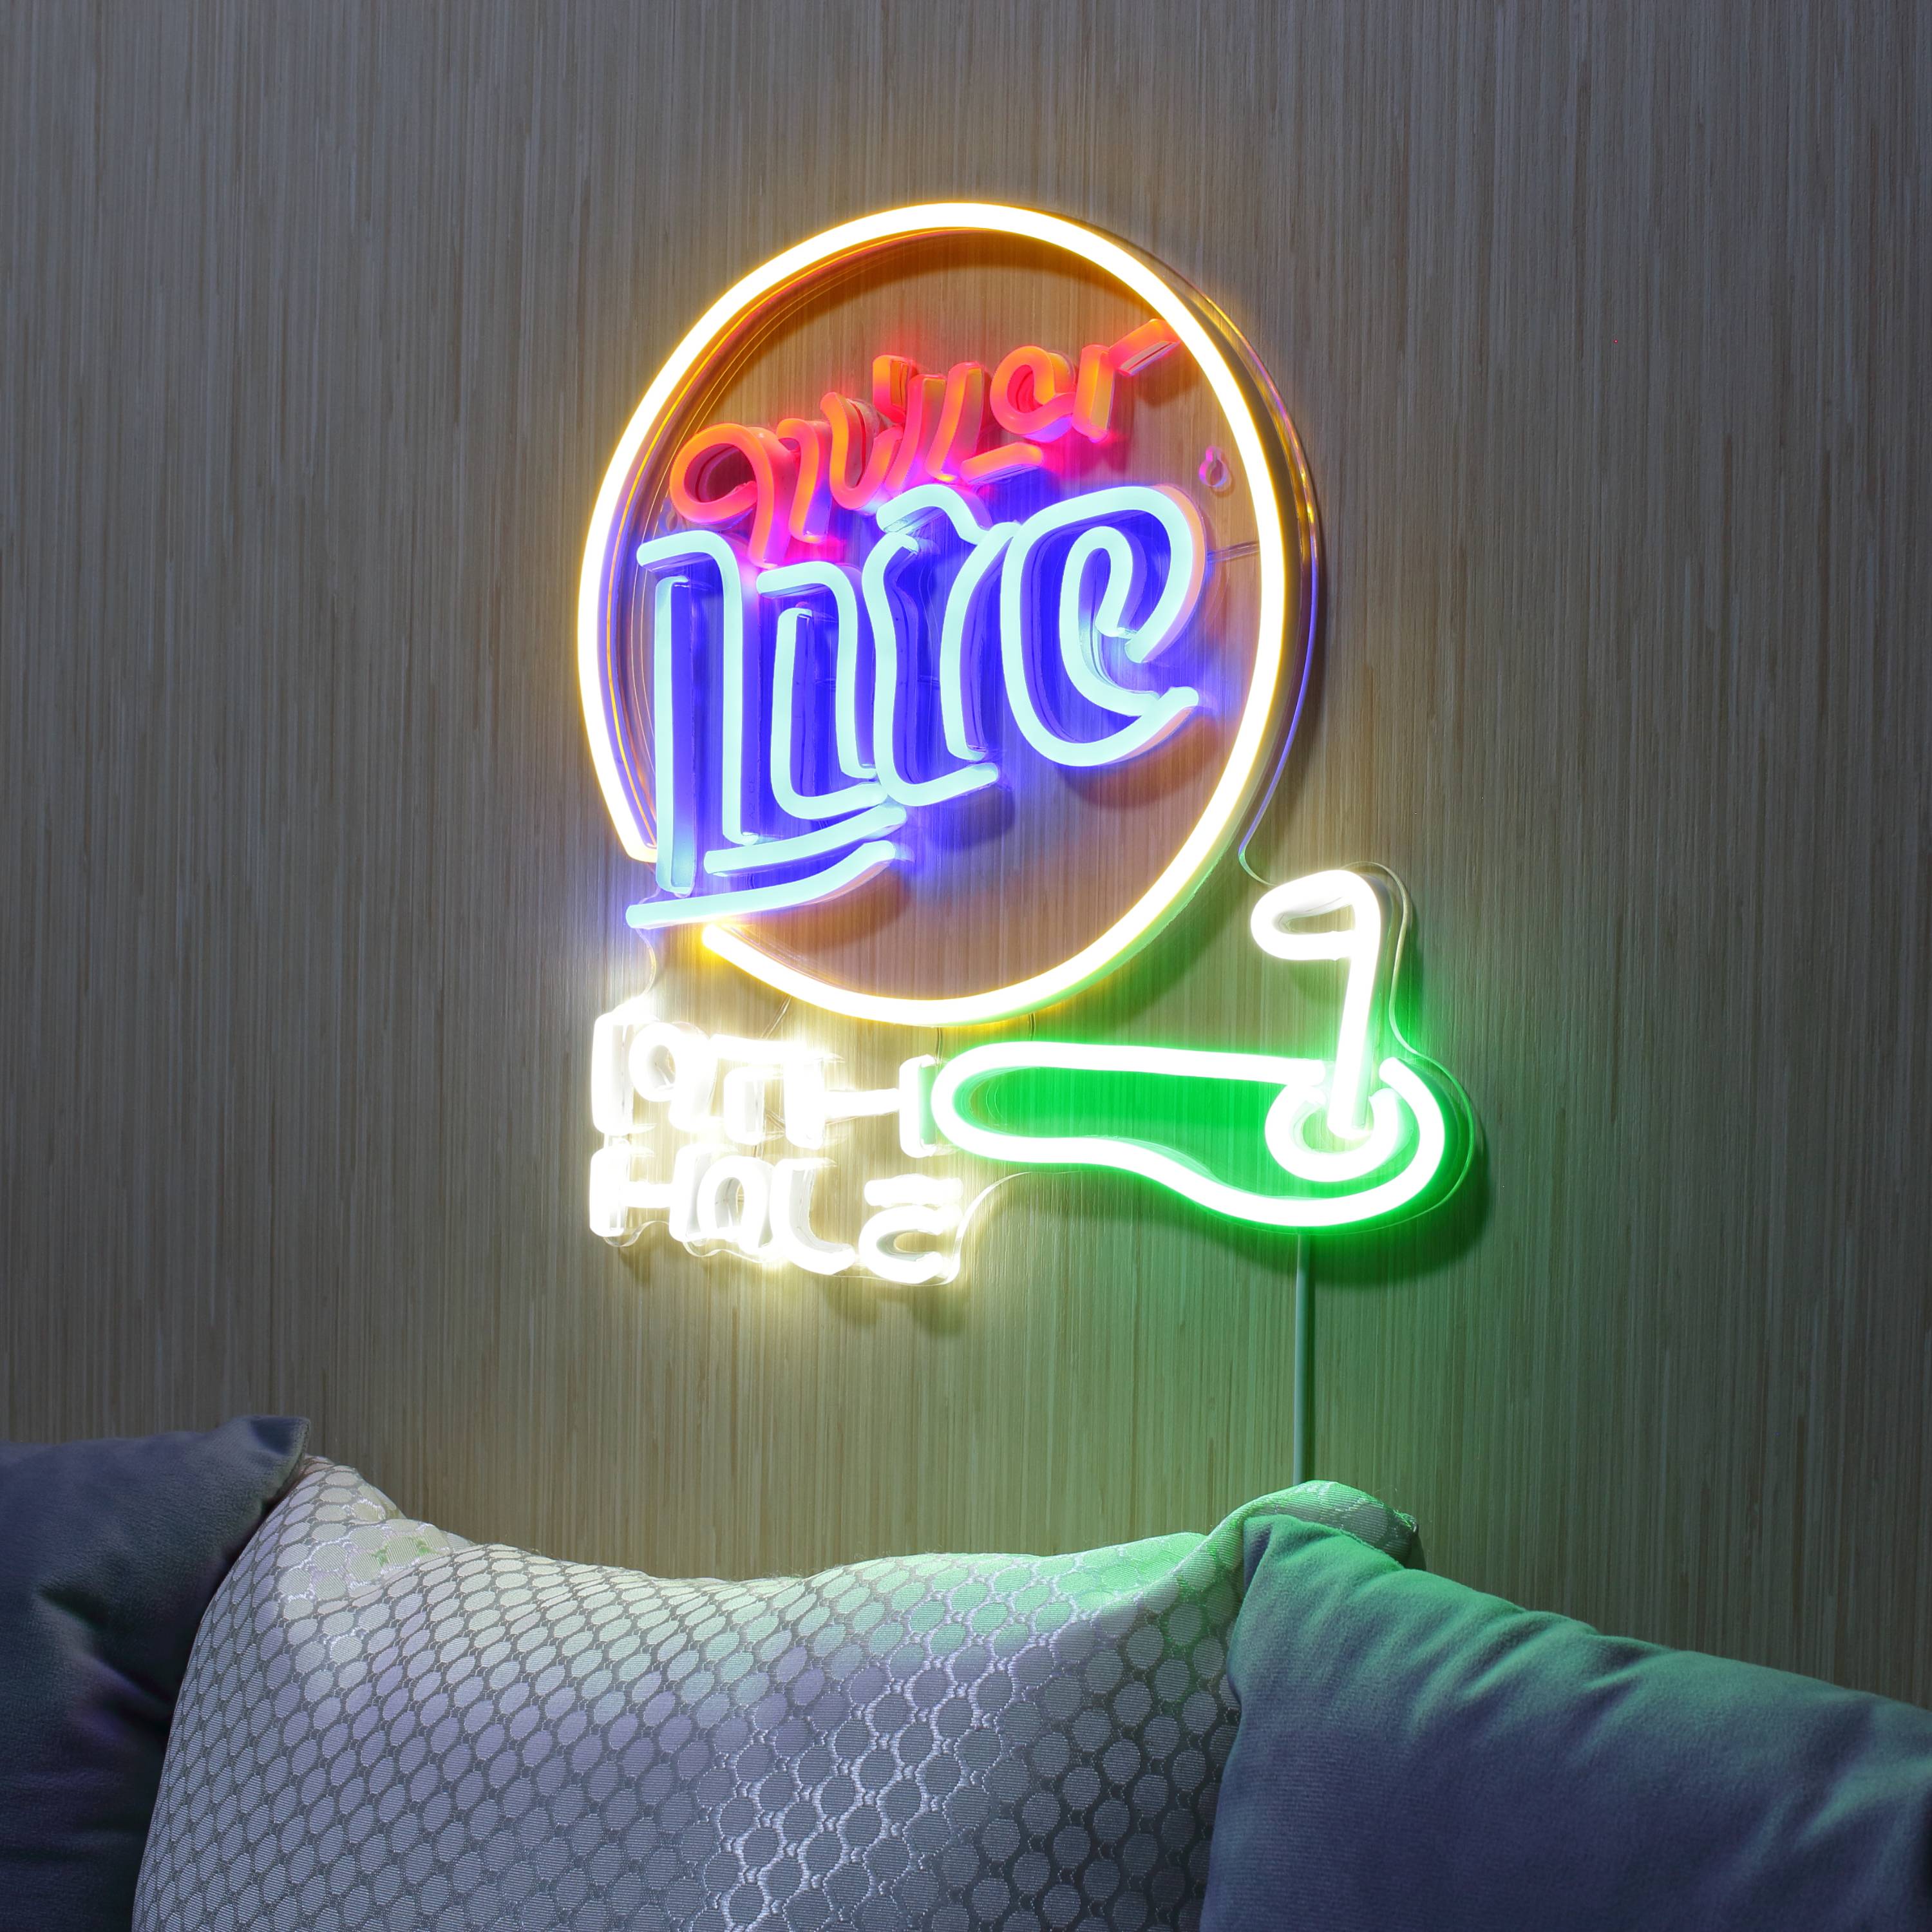 Miller Lite 19th Hole Large Flex Neon LED Sign